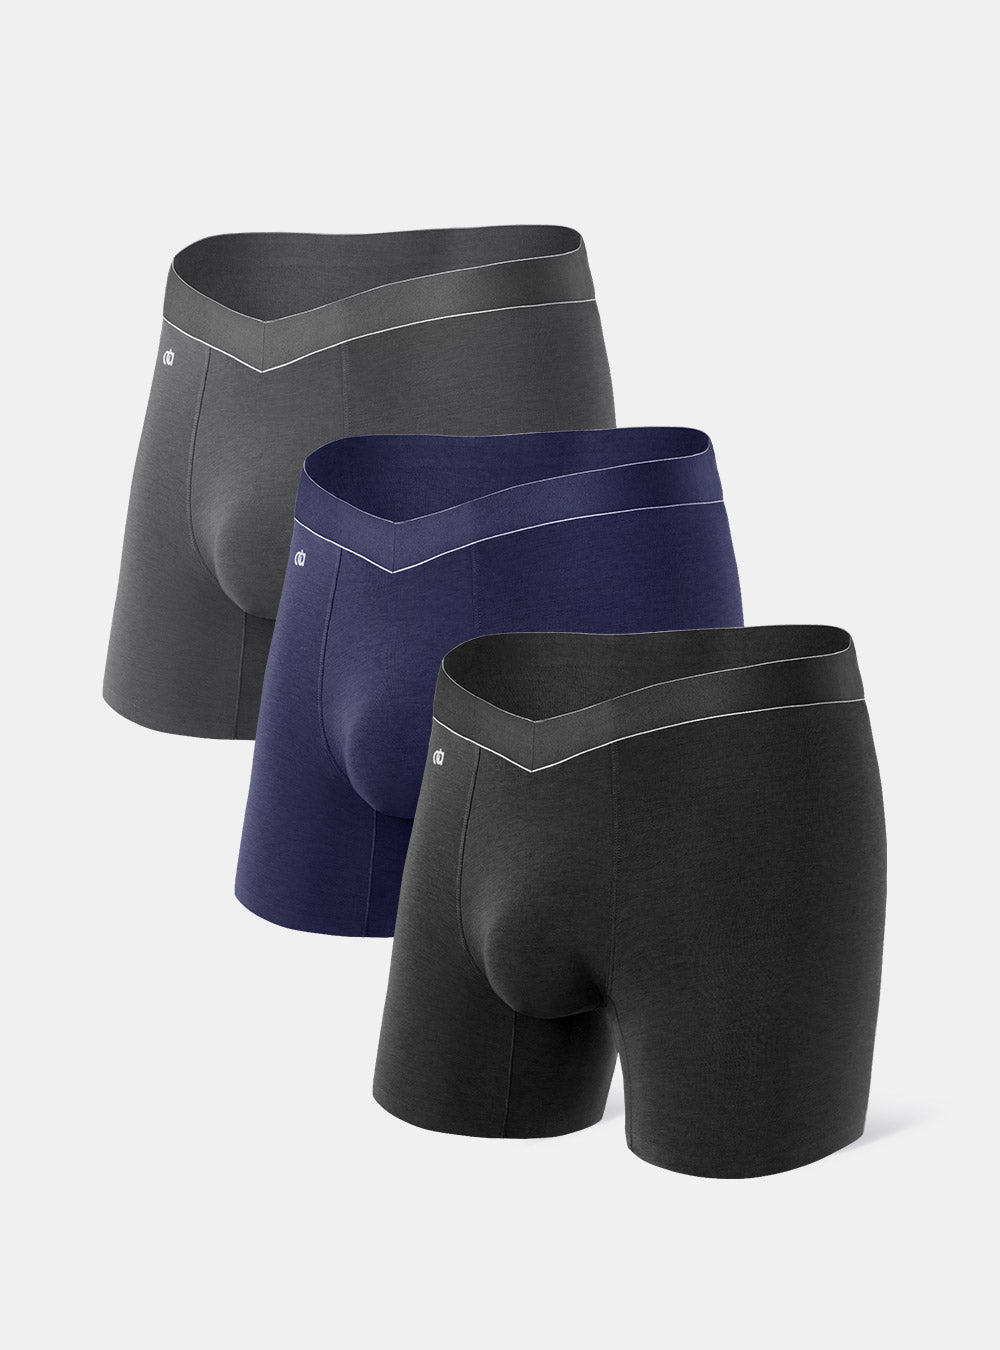 David Archy 3 Packs of Comfortable Moda Boxer Briefs Cool Silky 3D Pouch  Lightweight 3D Contour Pouc